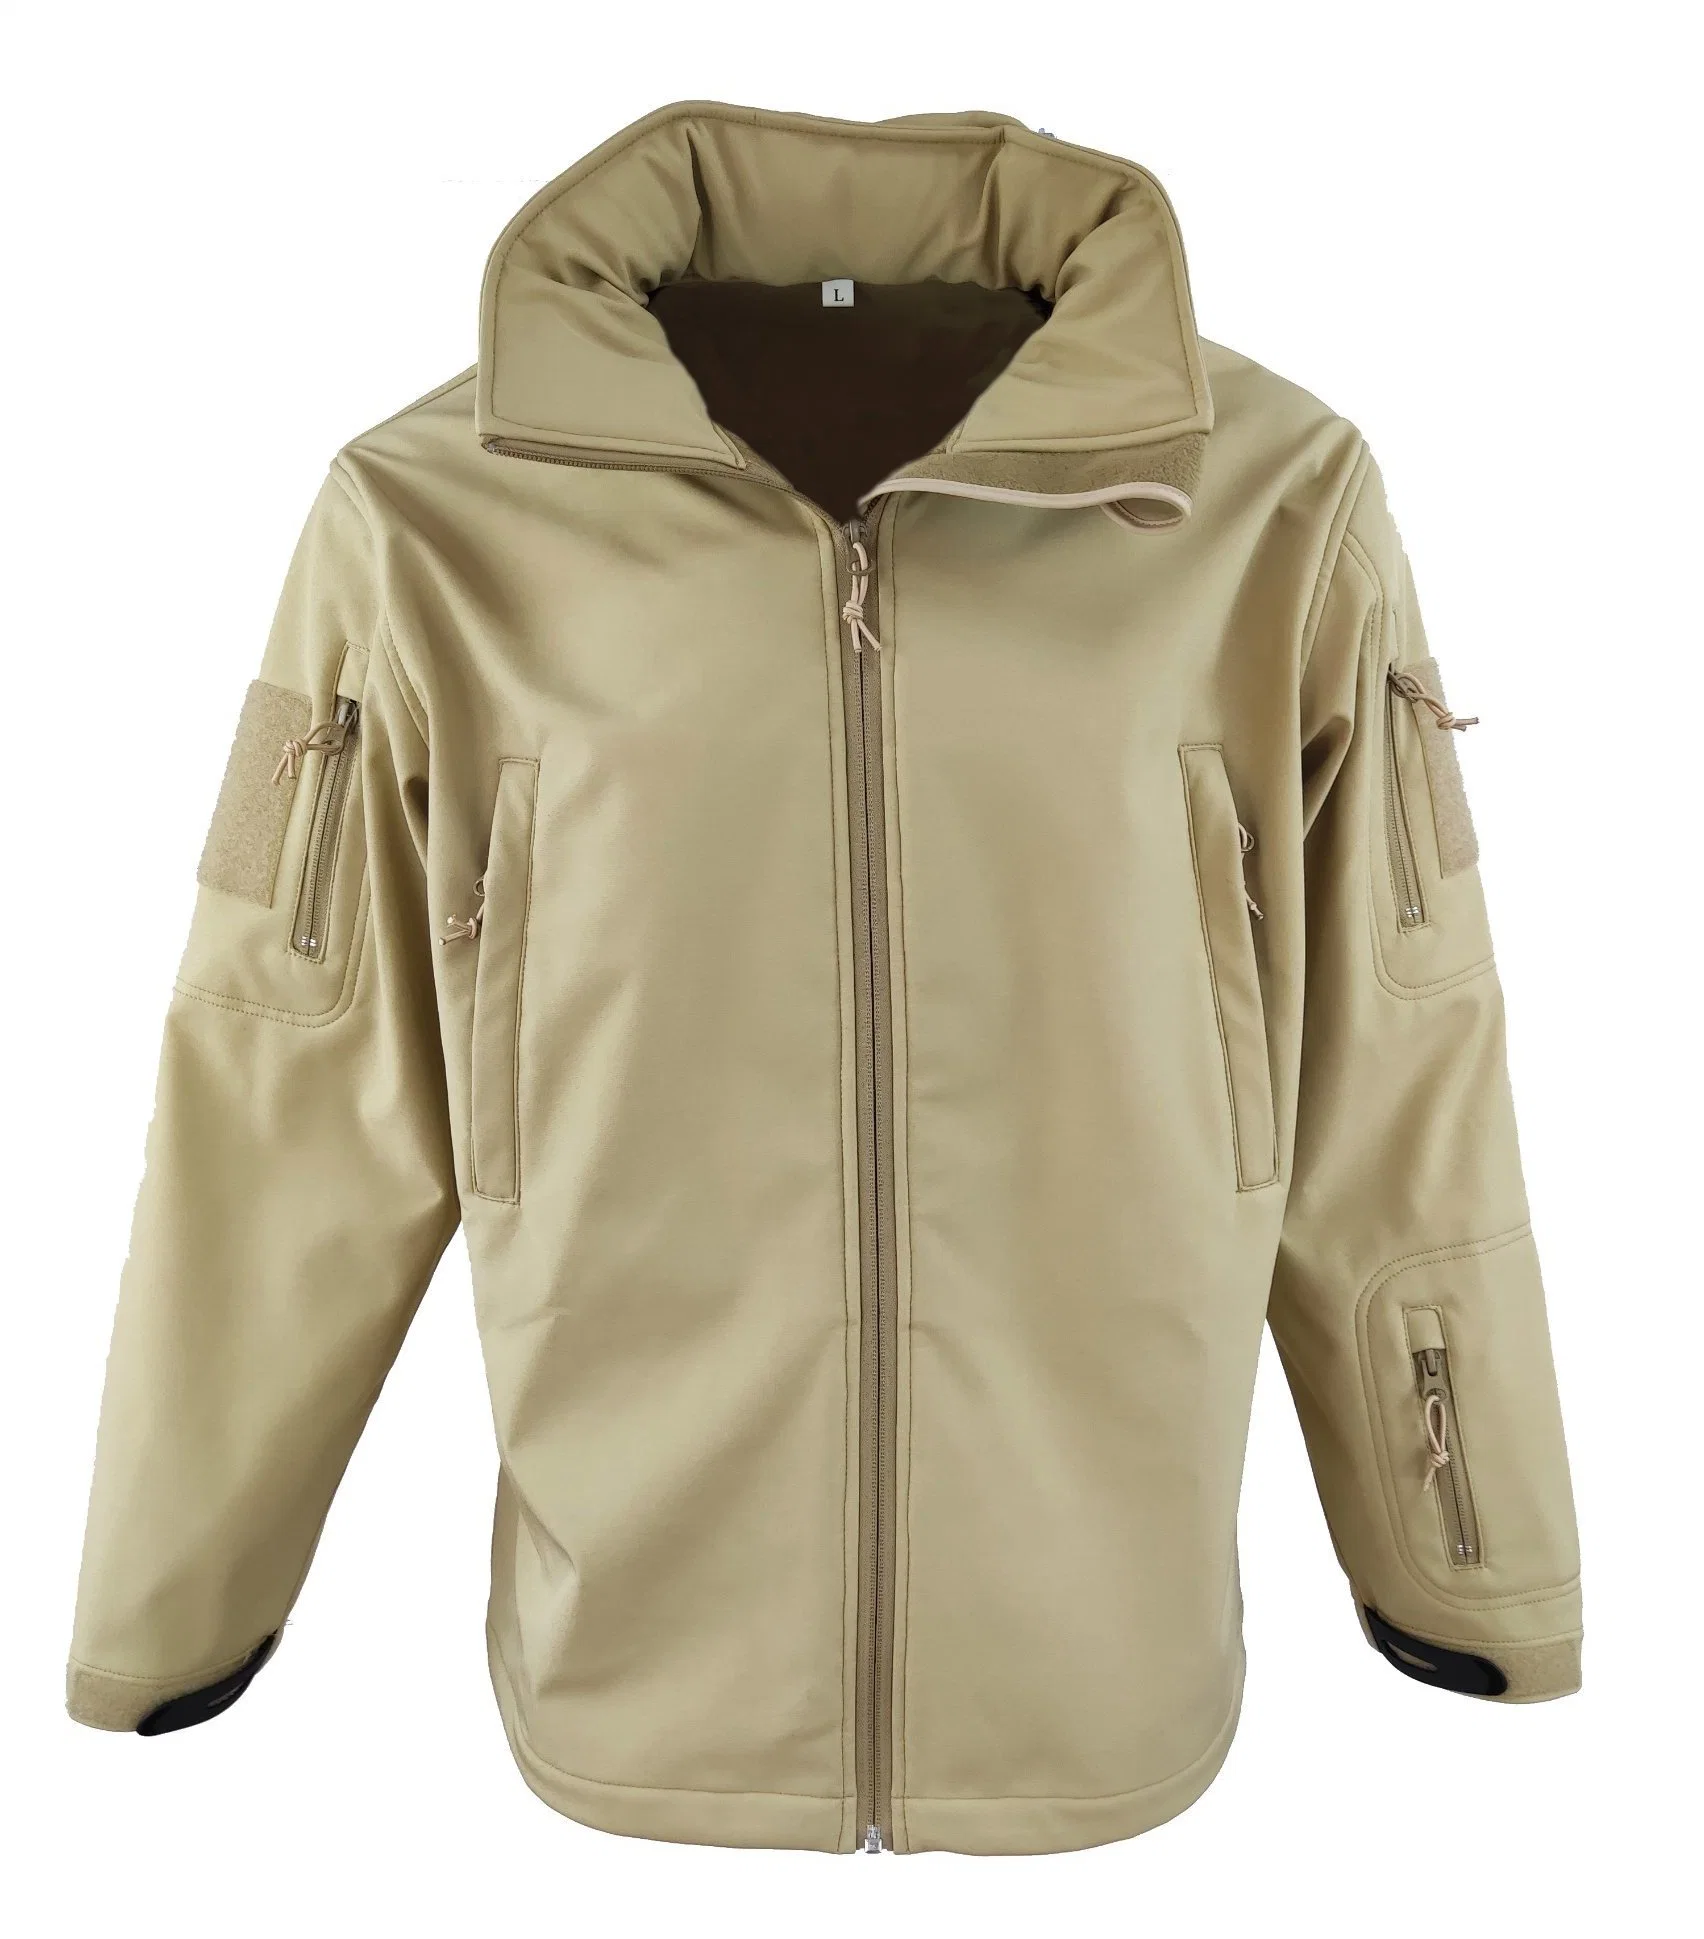 Kahki Police Outdoor Military Army Tactical Waterproof Breathable Nylon Fleece Softshell Jacket